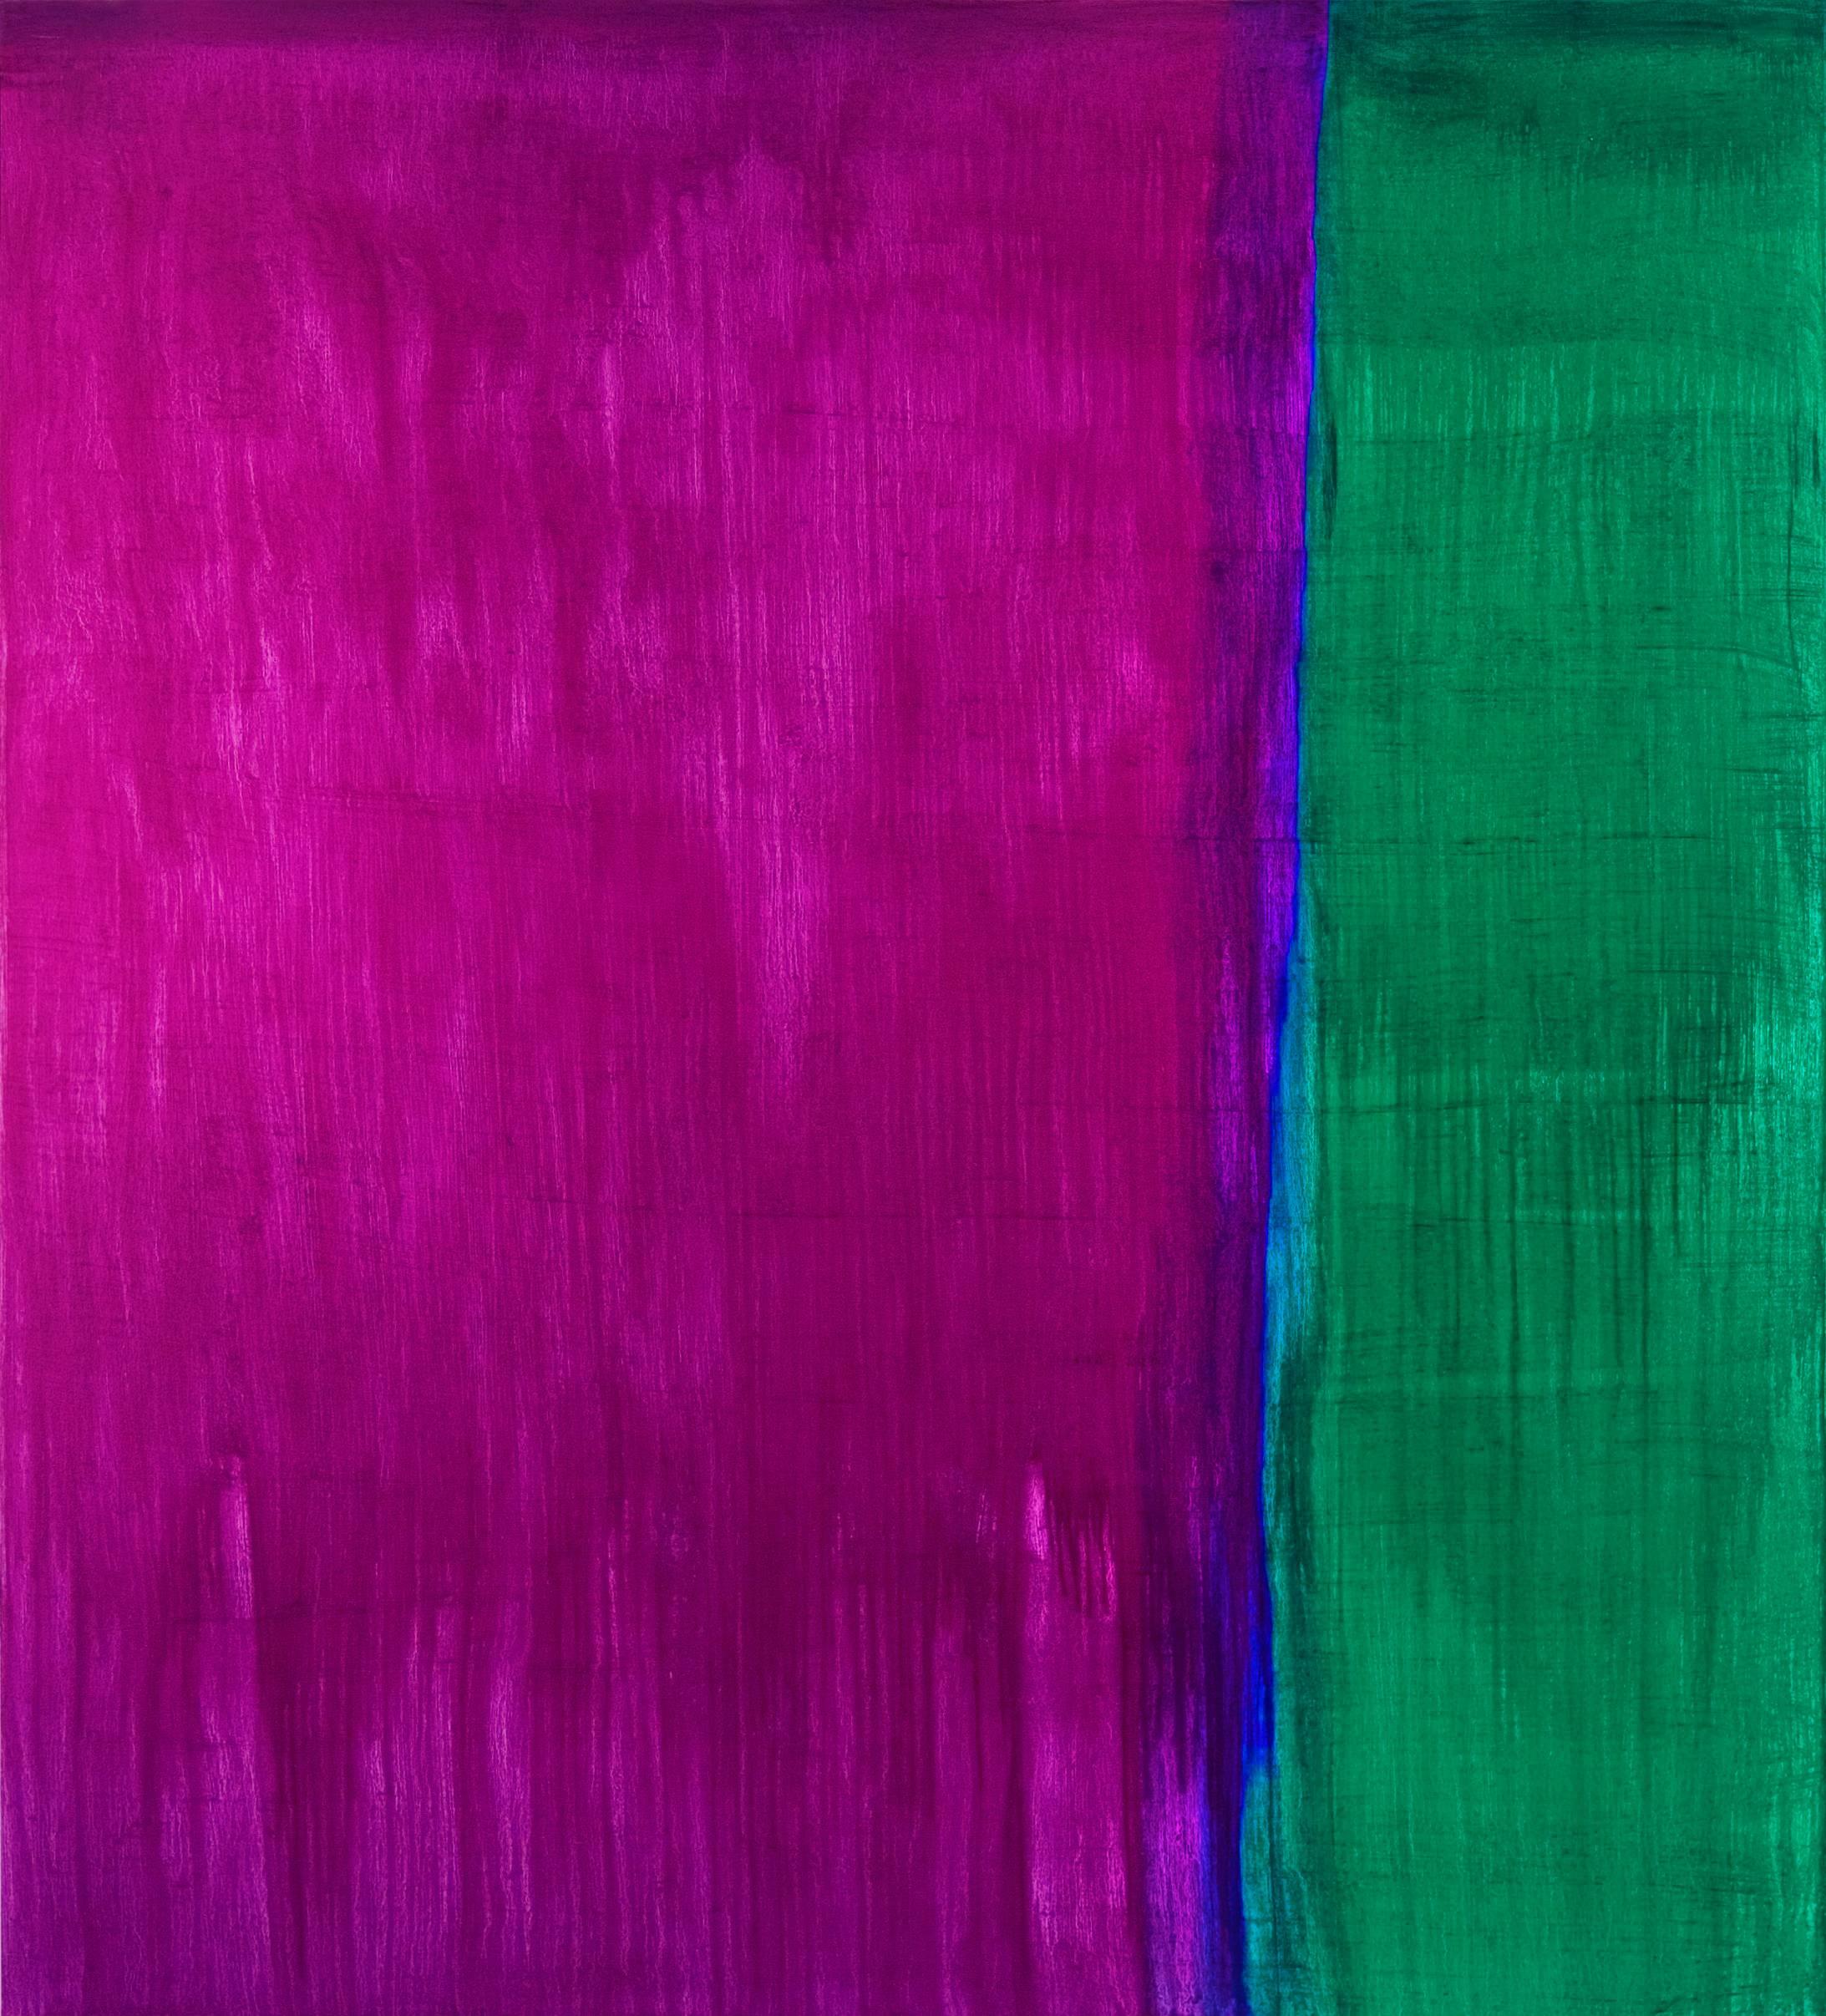 Anastasia Pelias Abstract Painting - Scylla and Charybdis (caesar purple, hello green light)